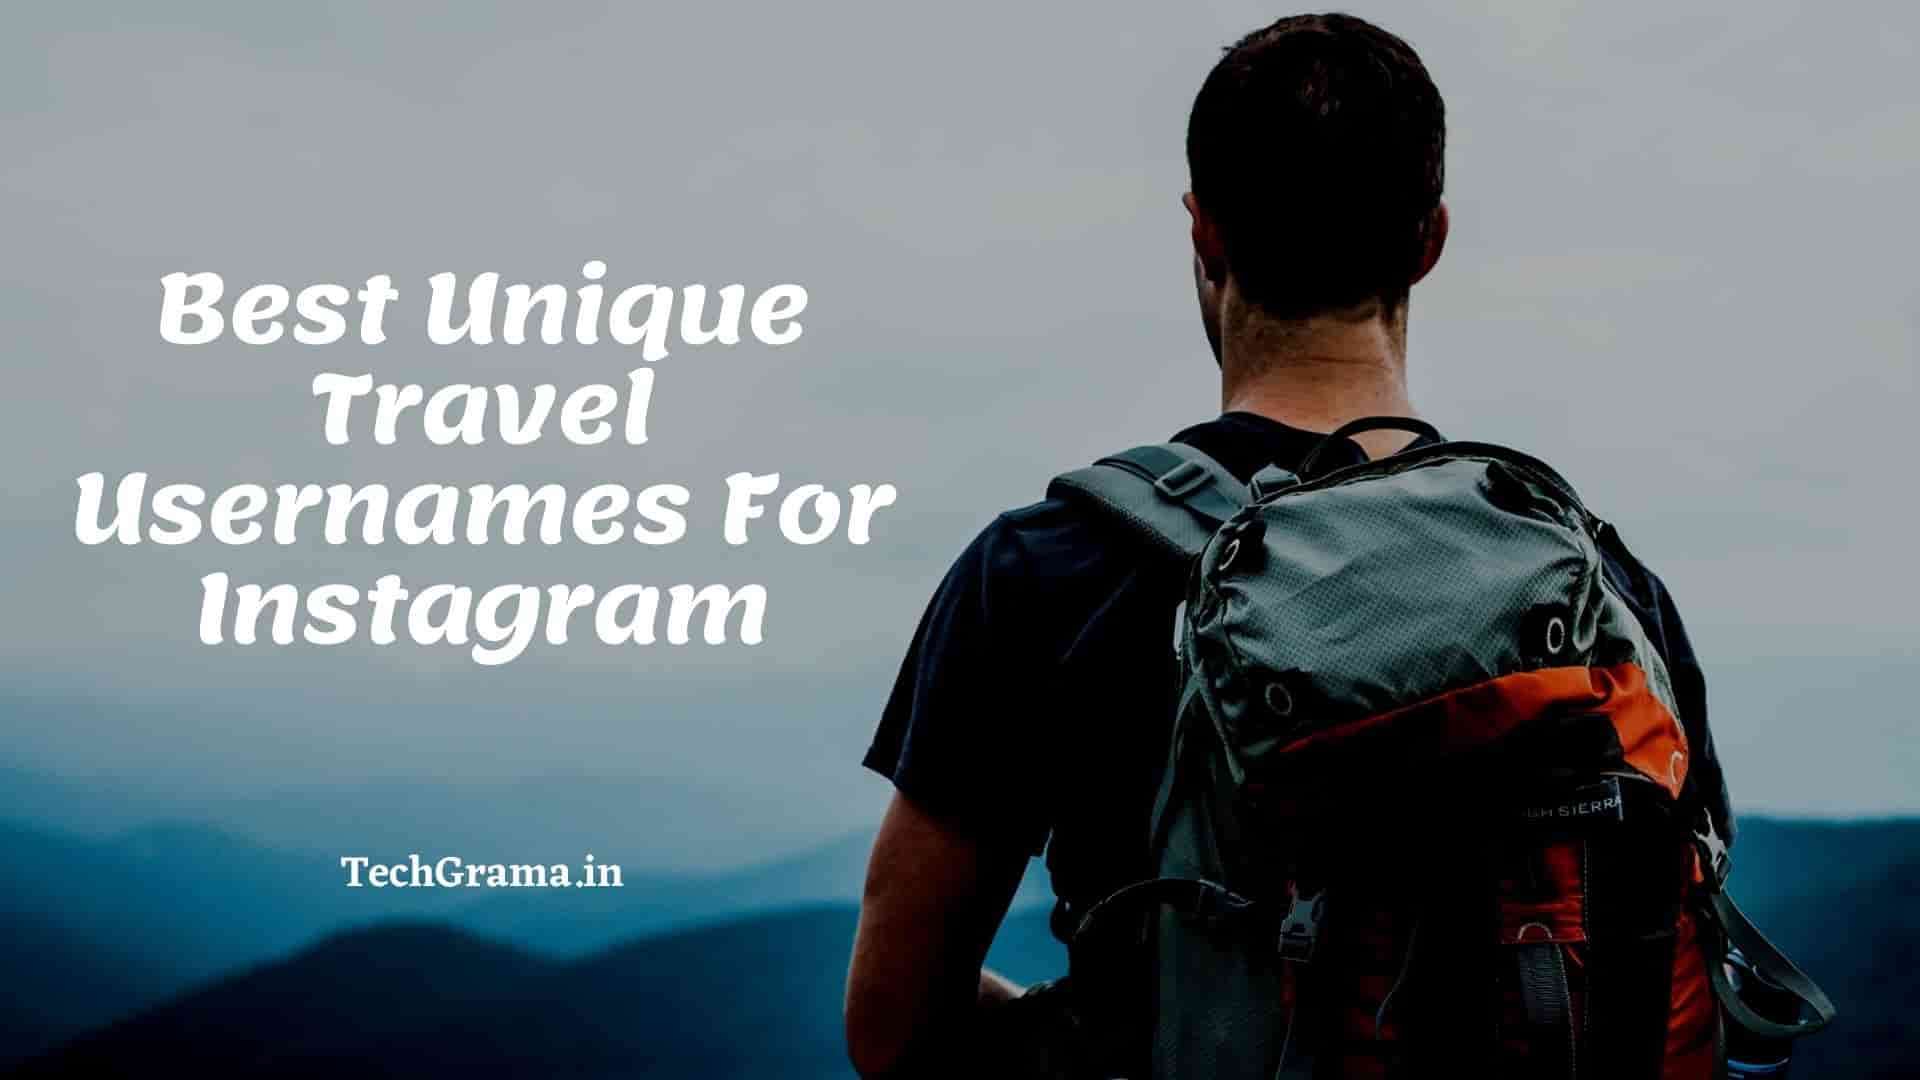 Best Unique Travel Usernames For Instagram, Travel Names Ideas, Funny Travel Group Names, Travel Names For Instagram, Instagram Username For Travellers, Insta Username For Traveller, Best Username For Traveller For Instagram